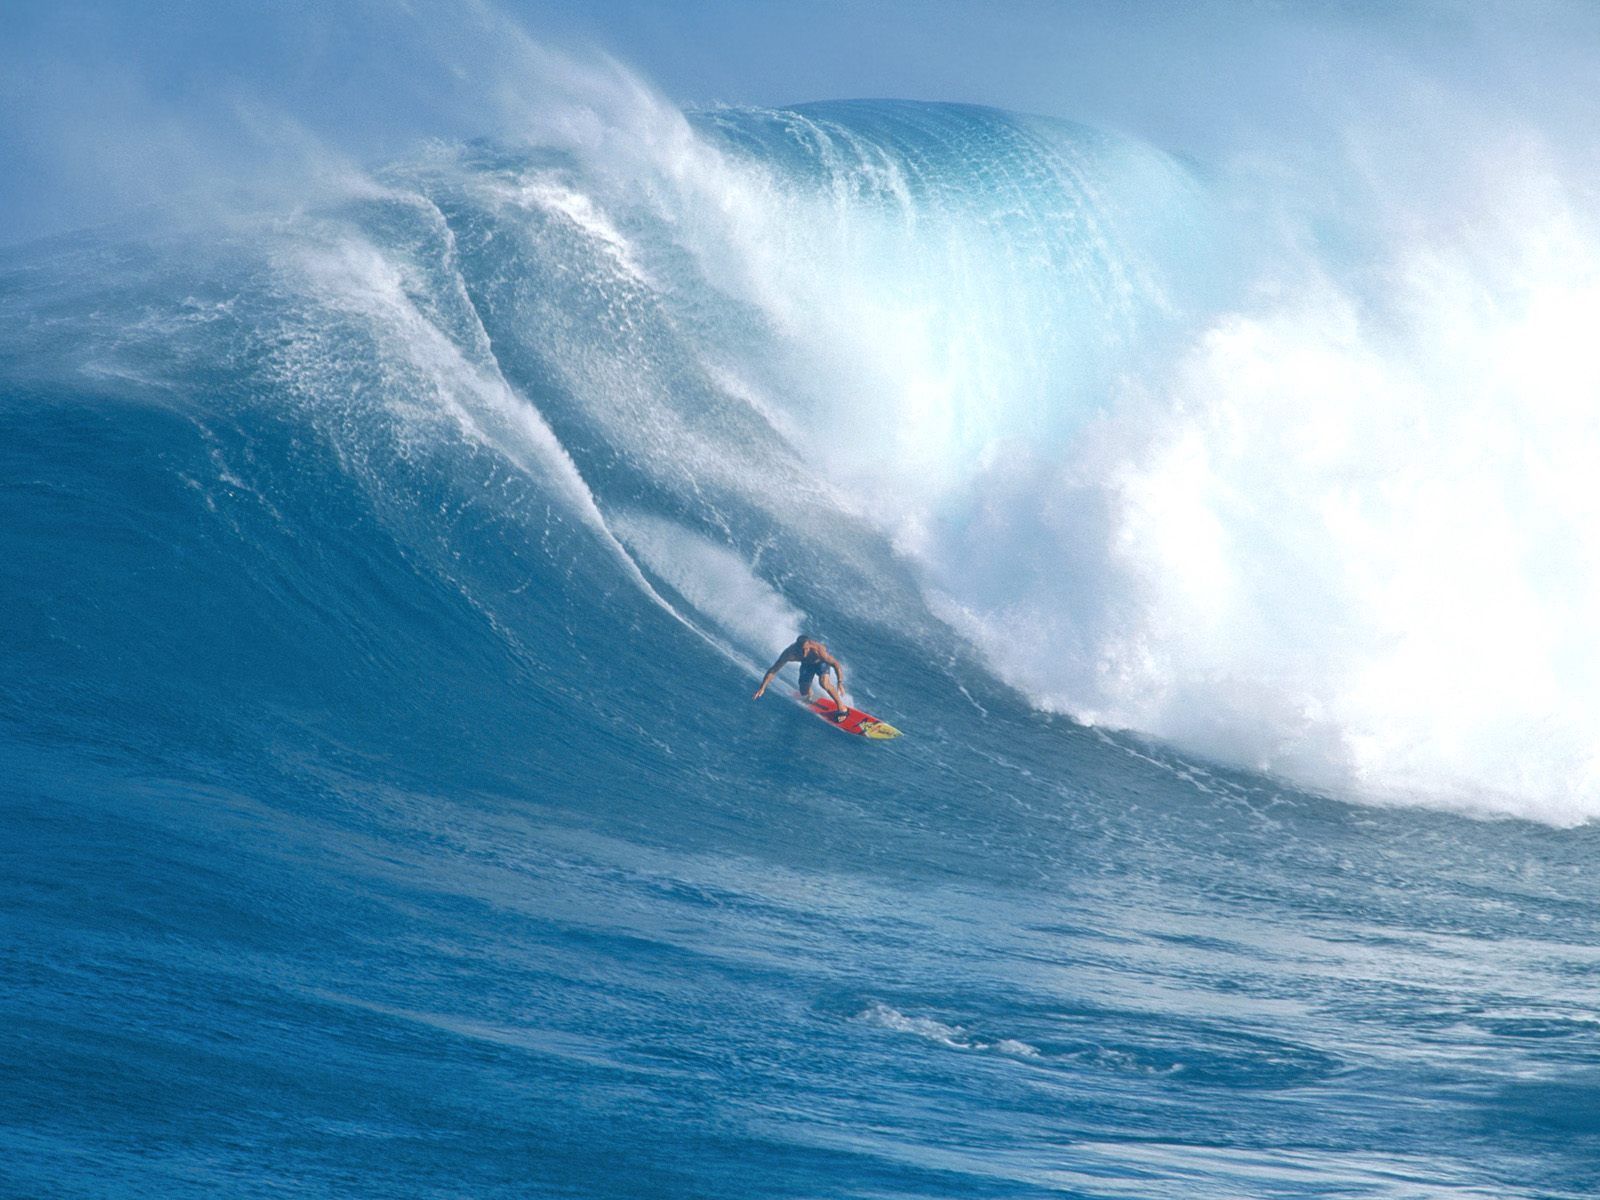 hawaii, sports, serfing, guy, wave, board